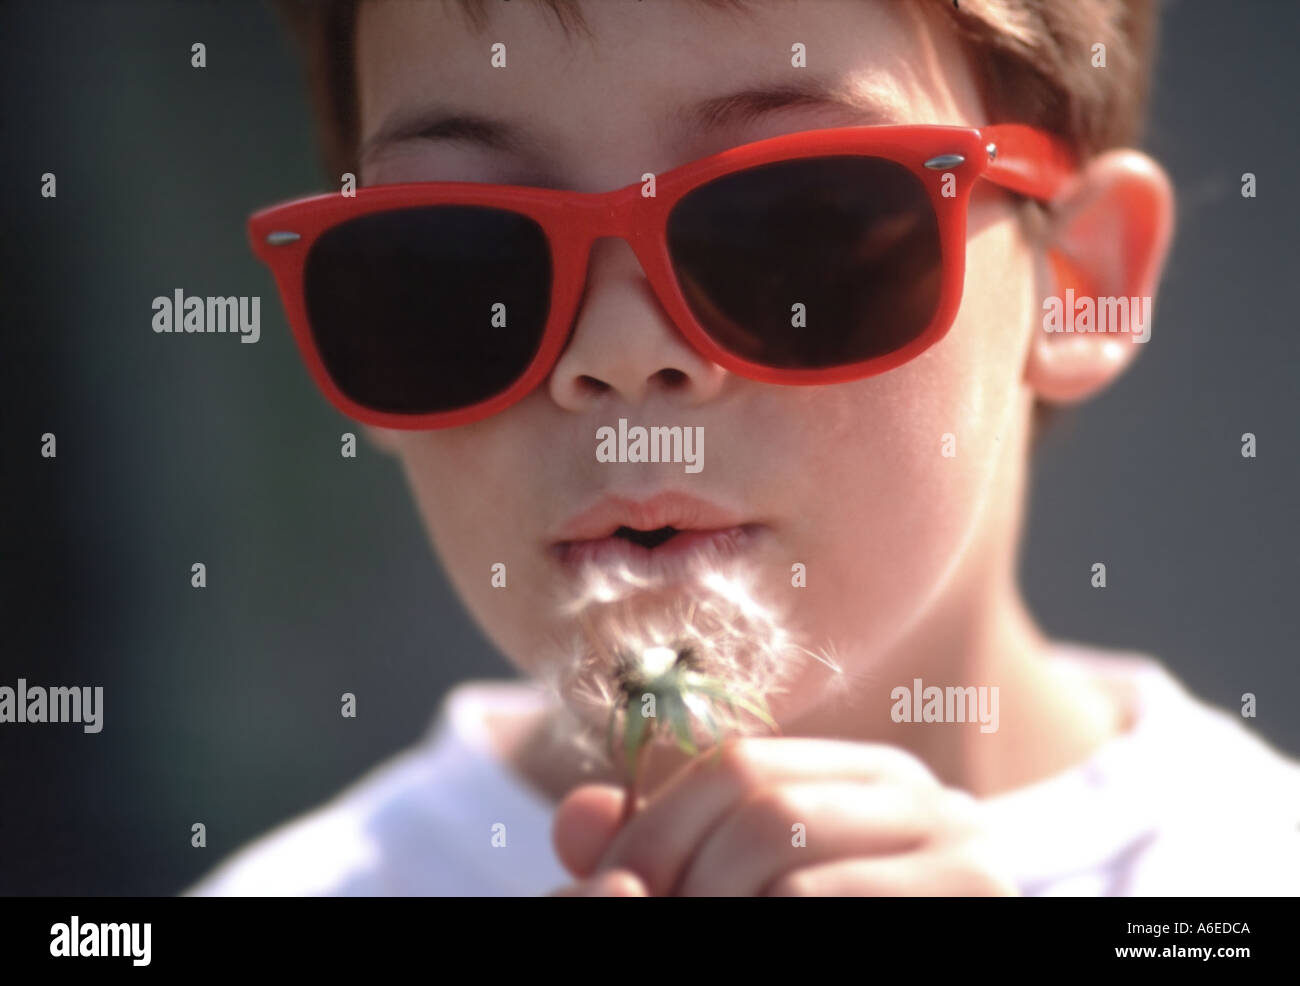 7 yr old boy blowing seeds off dandelion head Stock Photo